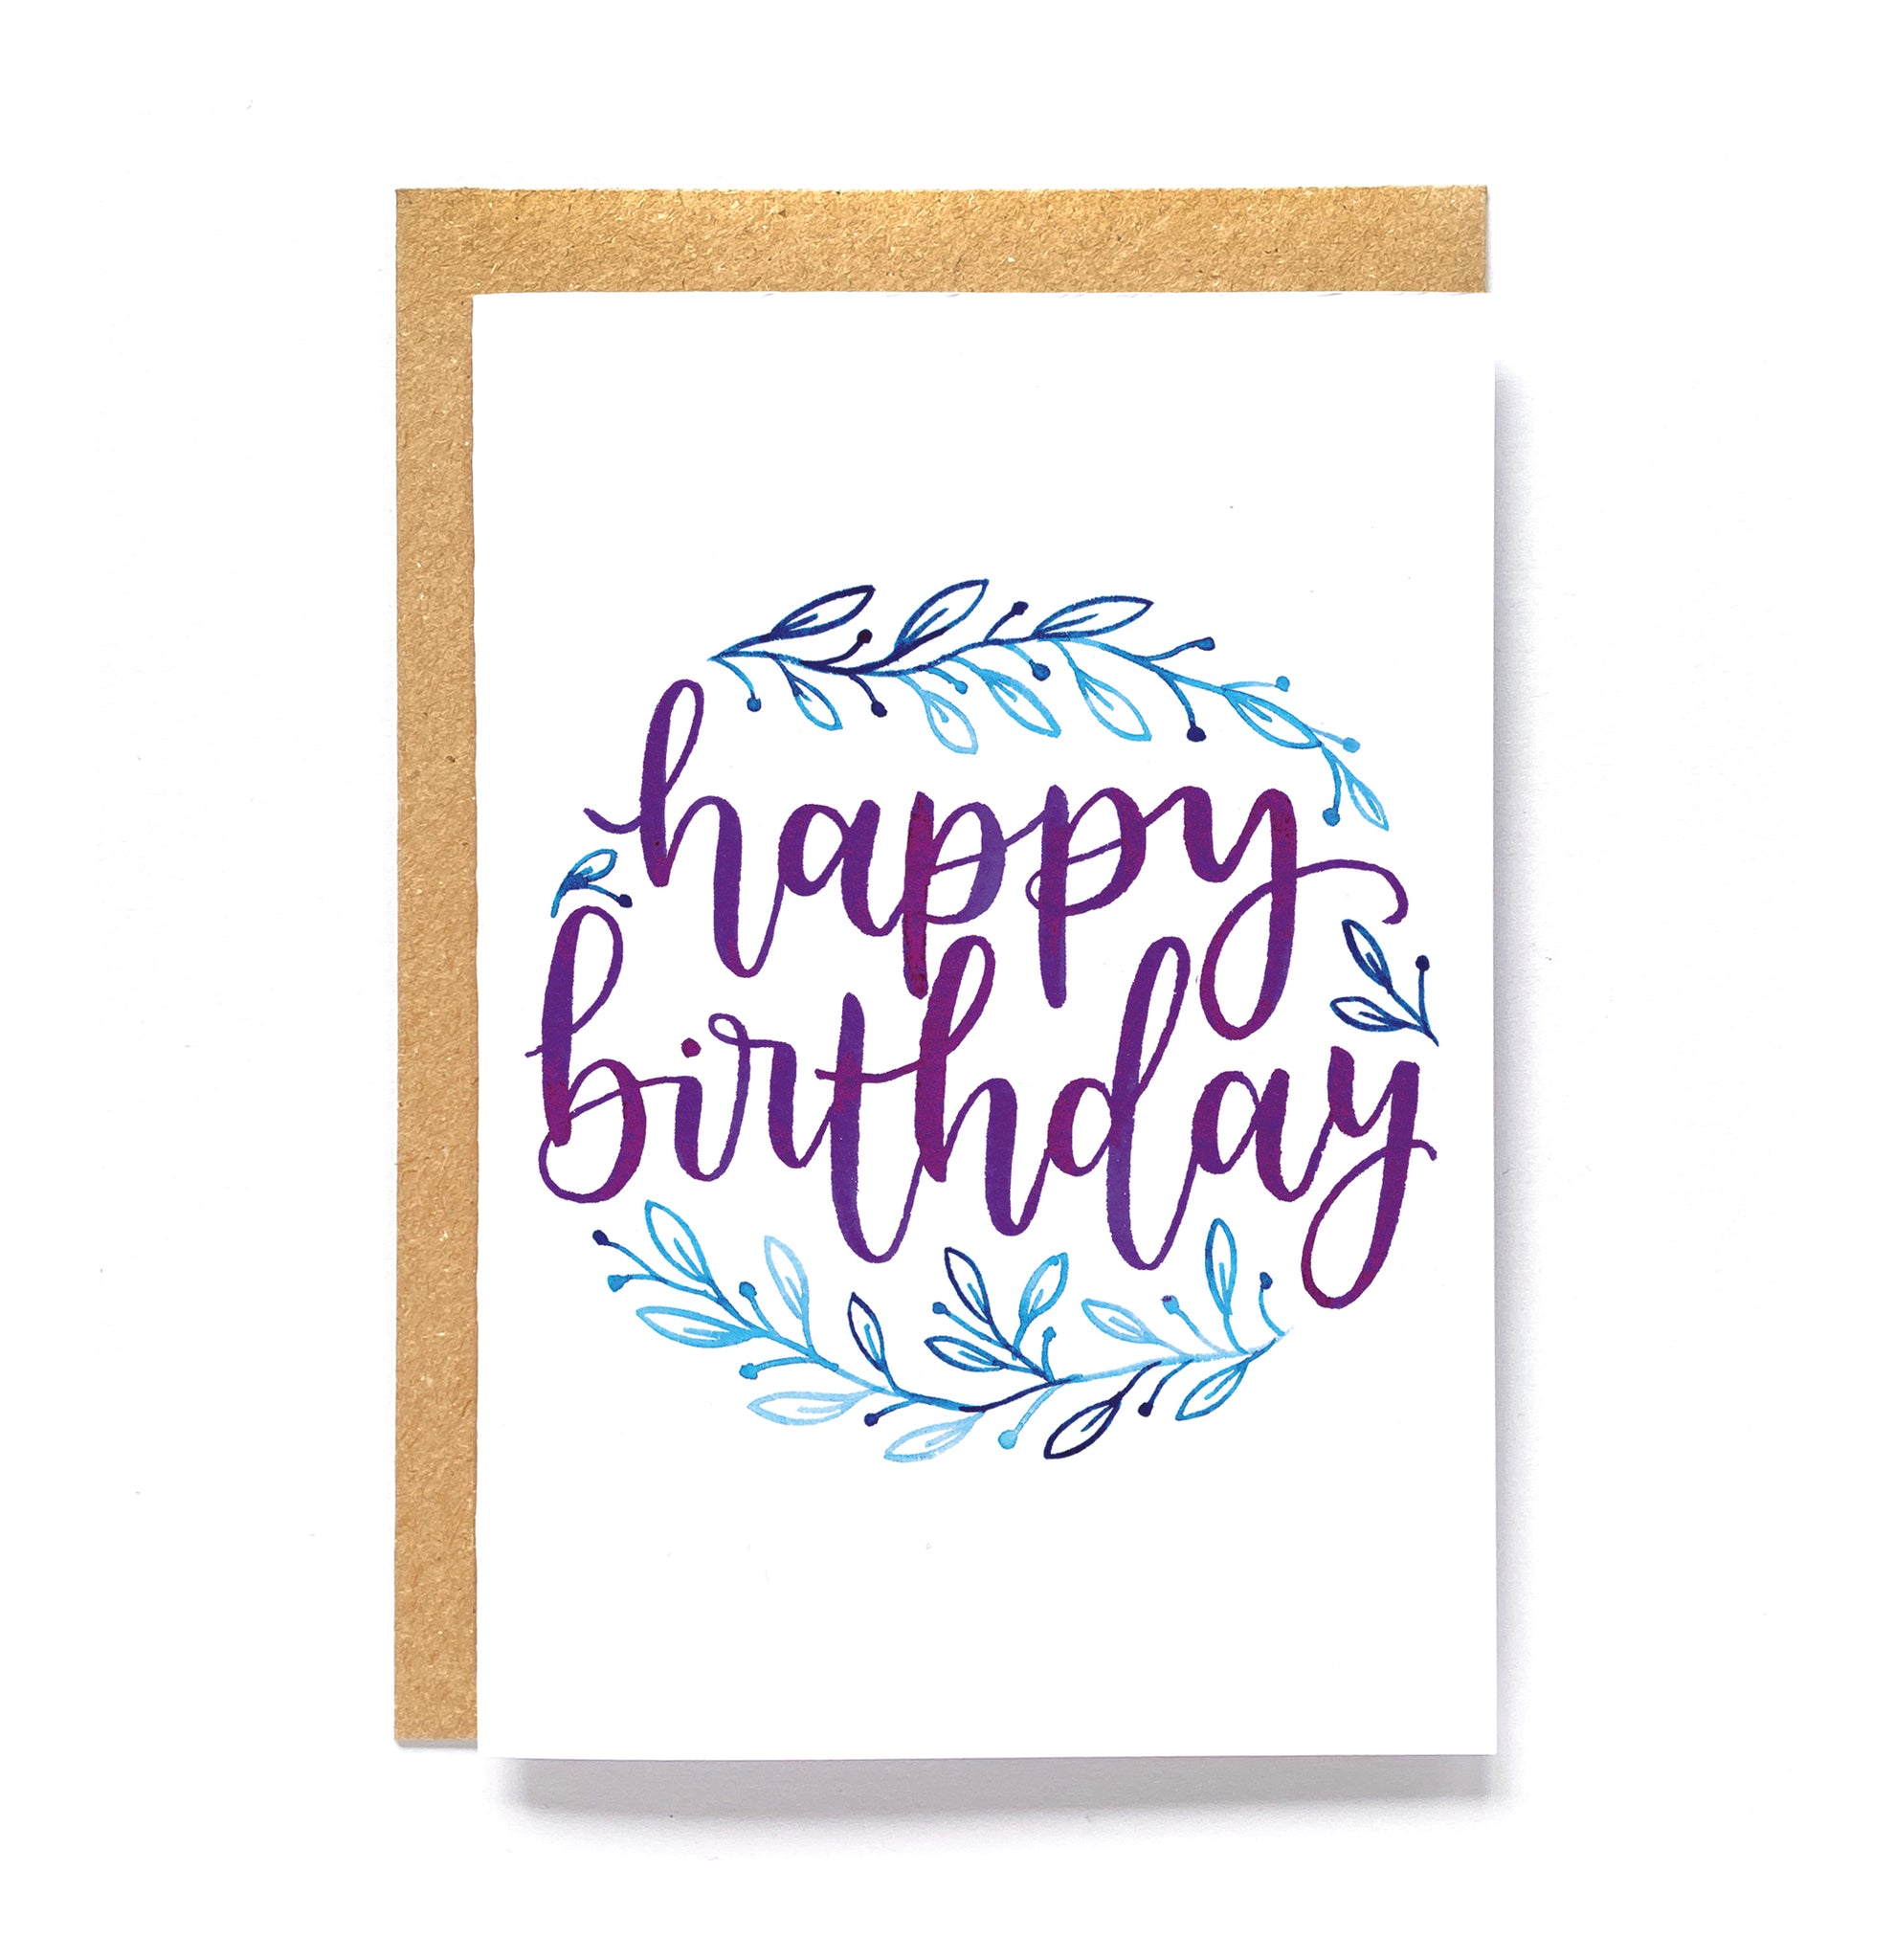 Birthday card - Happy birthday wreath